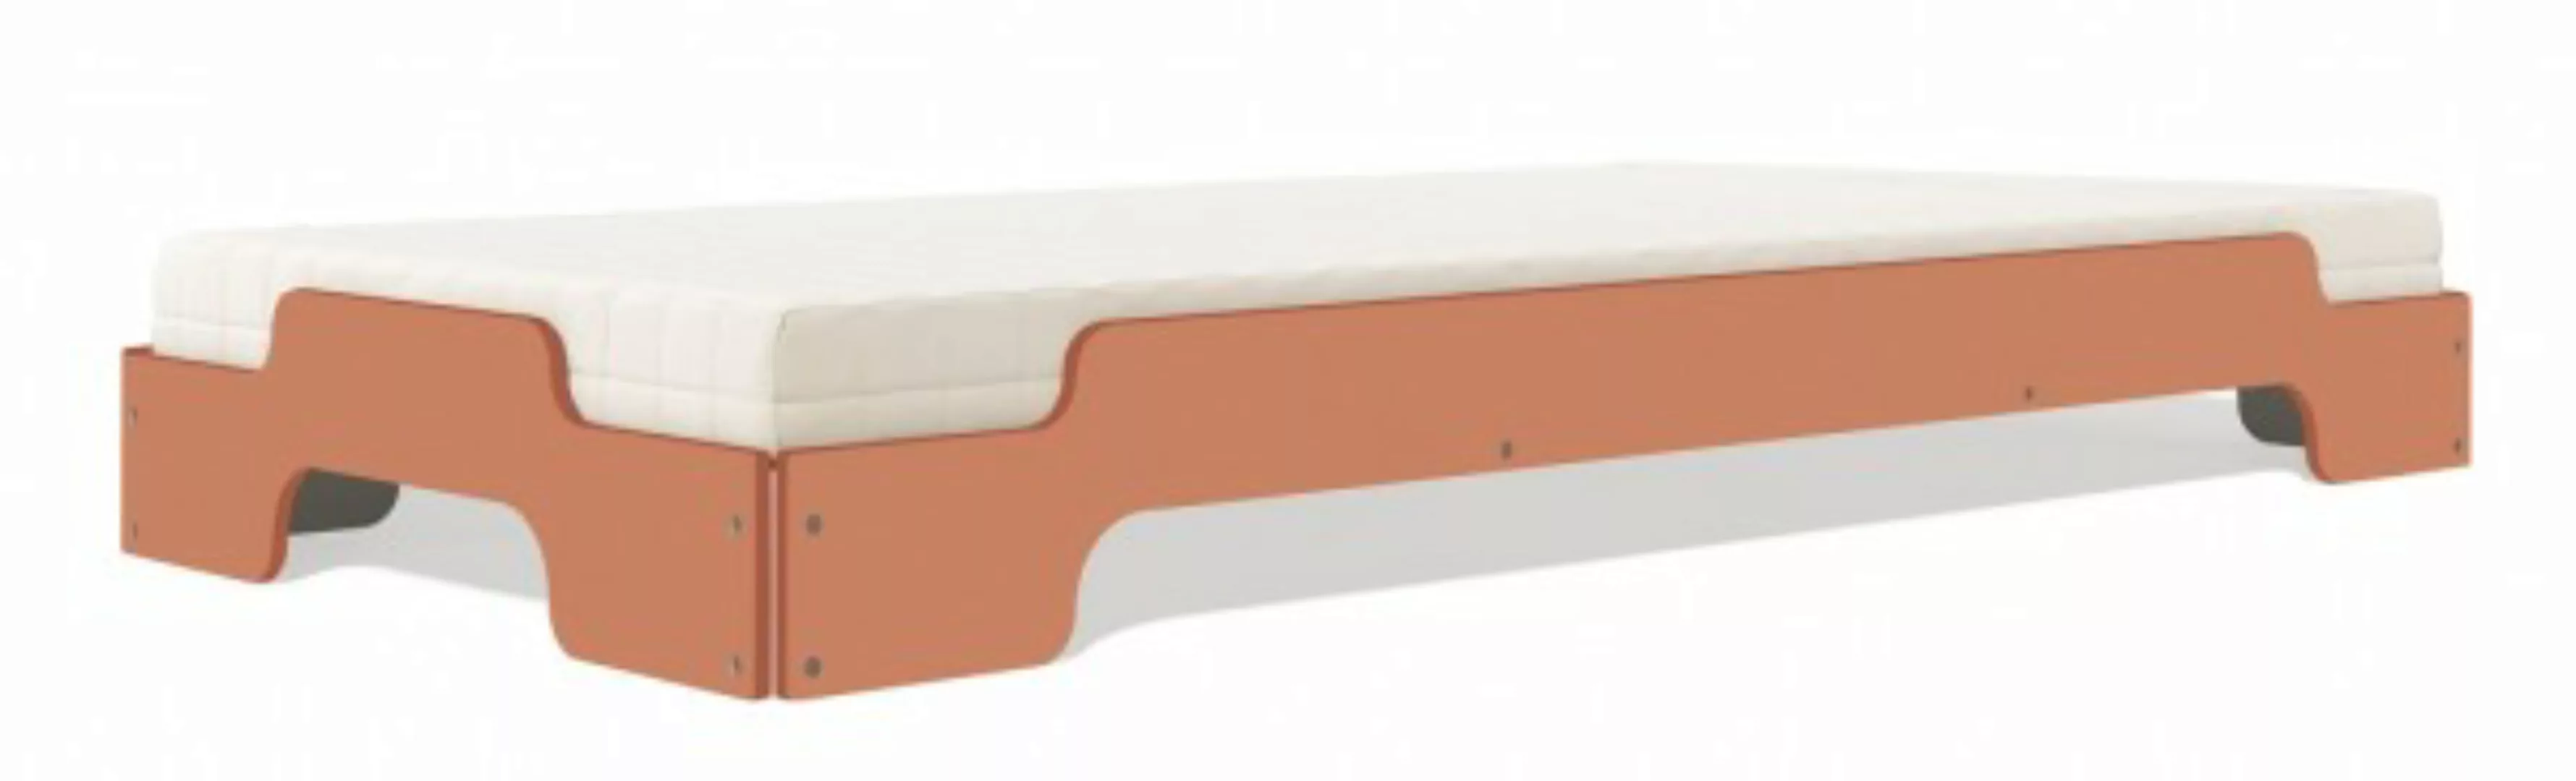 Stapelliege KLASSIK - Farbig apricotbraun RAL 050 60 40 100 x 200 cm günstig online kaufen